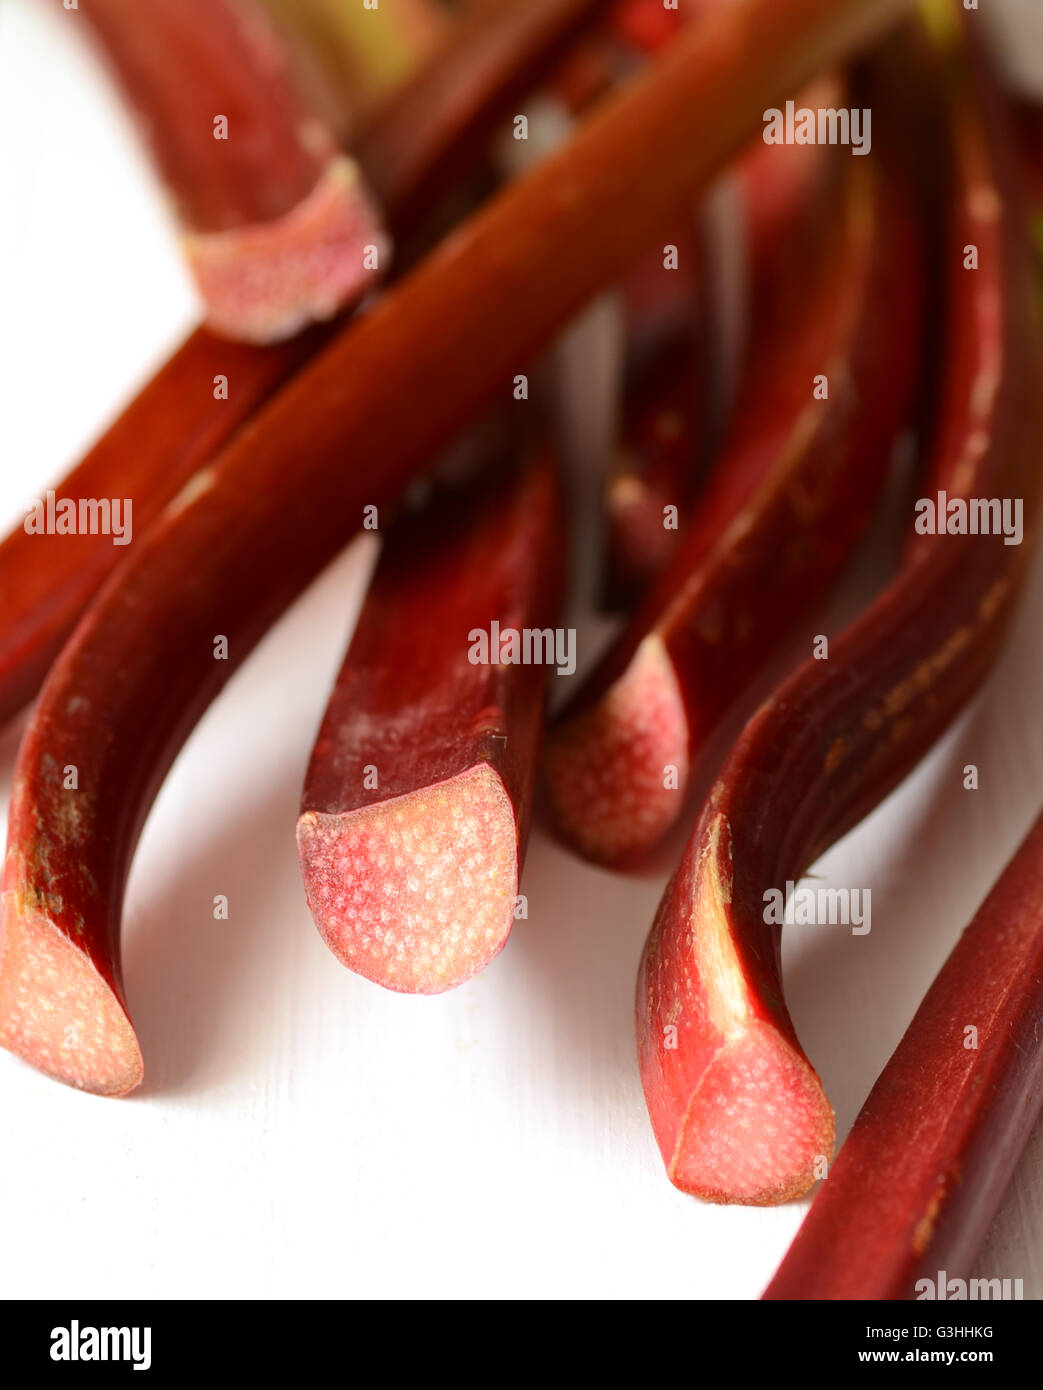 Bunch of fresh picked organic rhubarb stalks Stock Photo